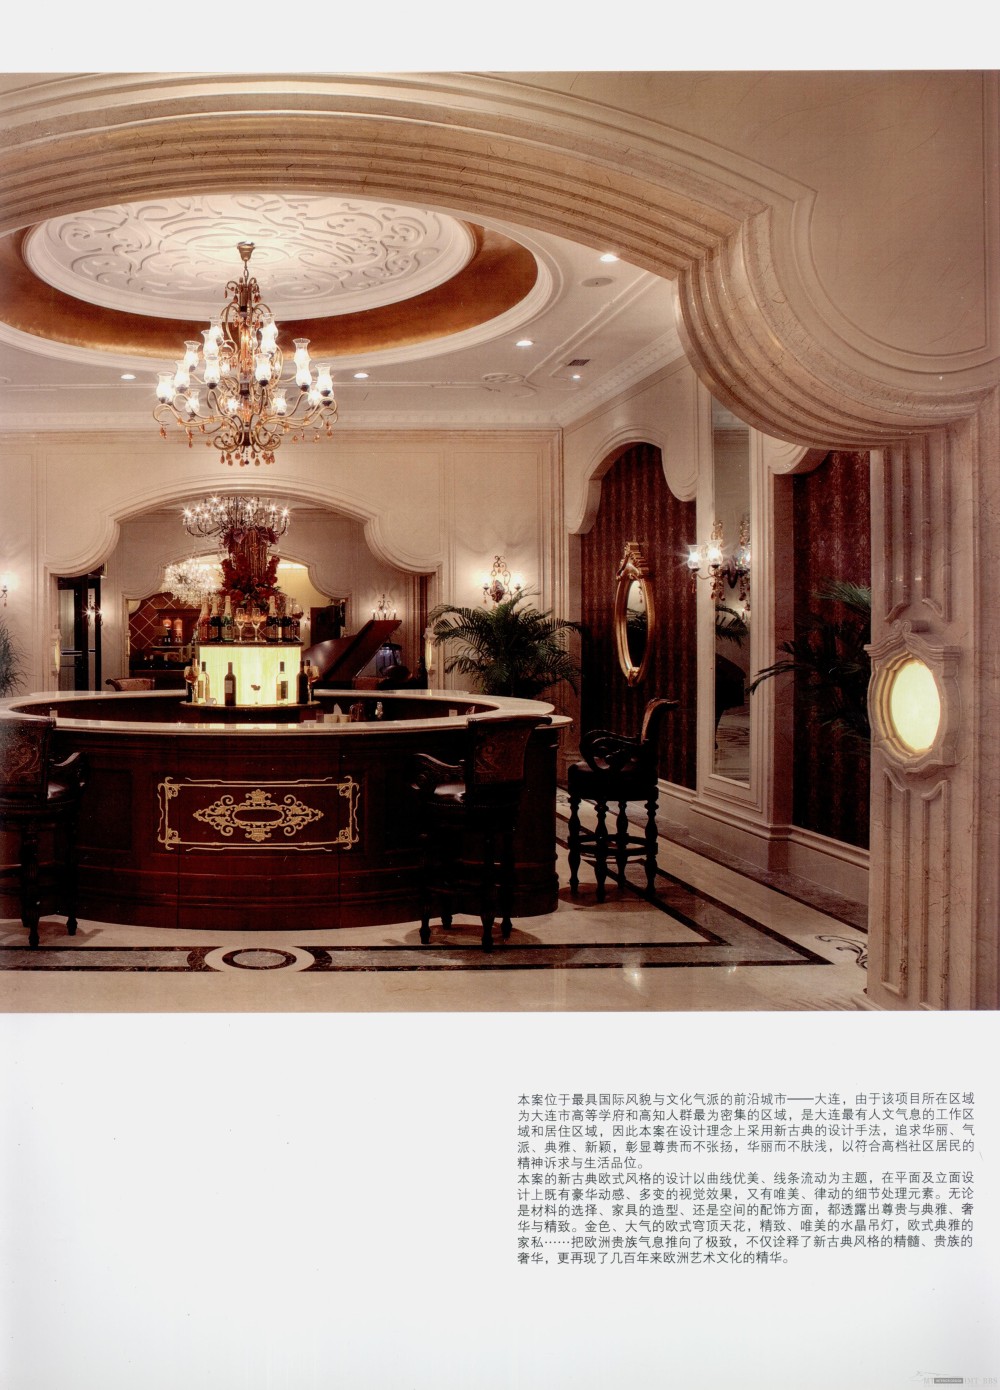 2010 China Interior Design Annual 2010中国室内设计年鉴 -2(上传中）_13671144854 0013.JPG